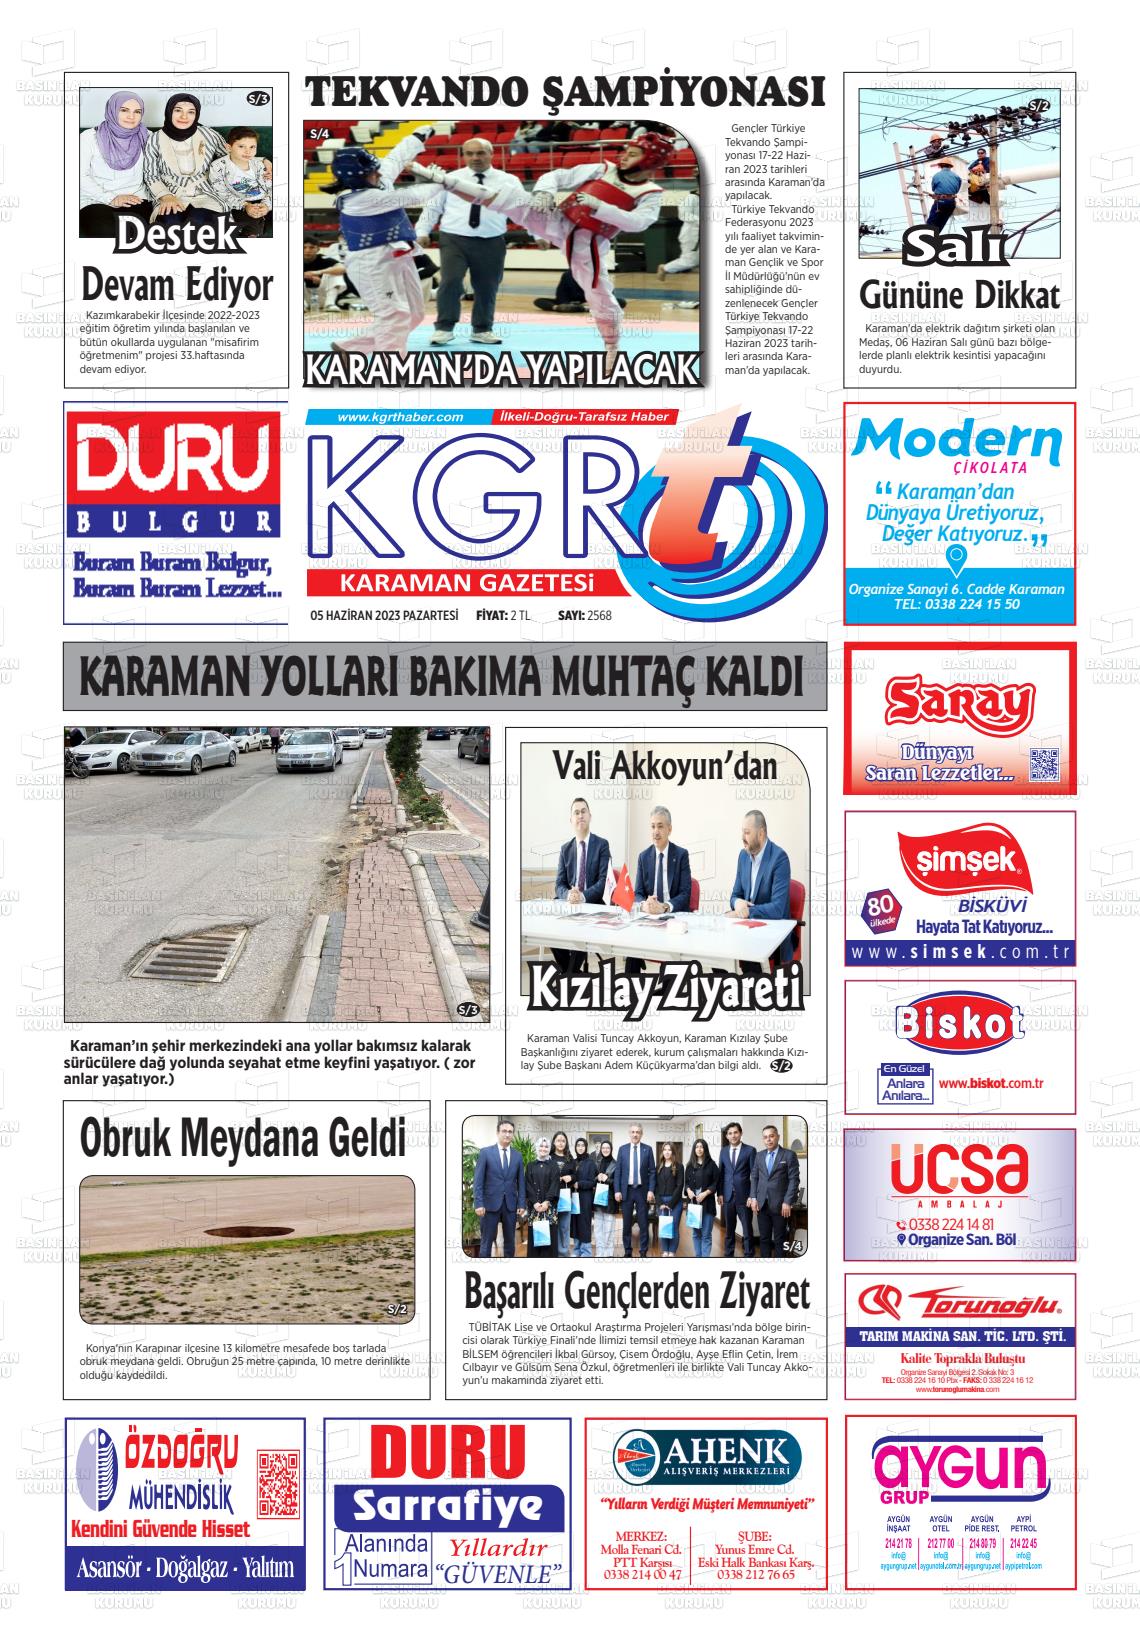 05 Haziran 2023 Kgrt Karaman Gazete Manşeti